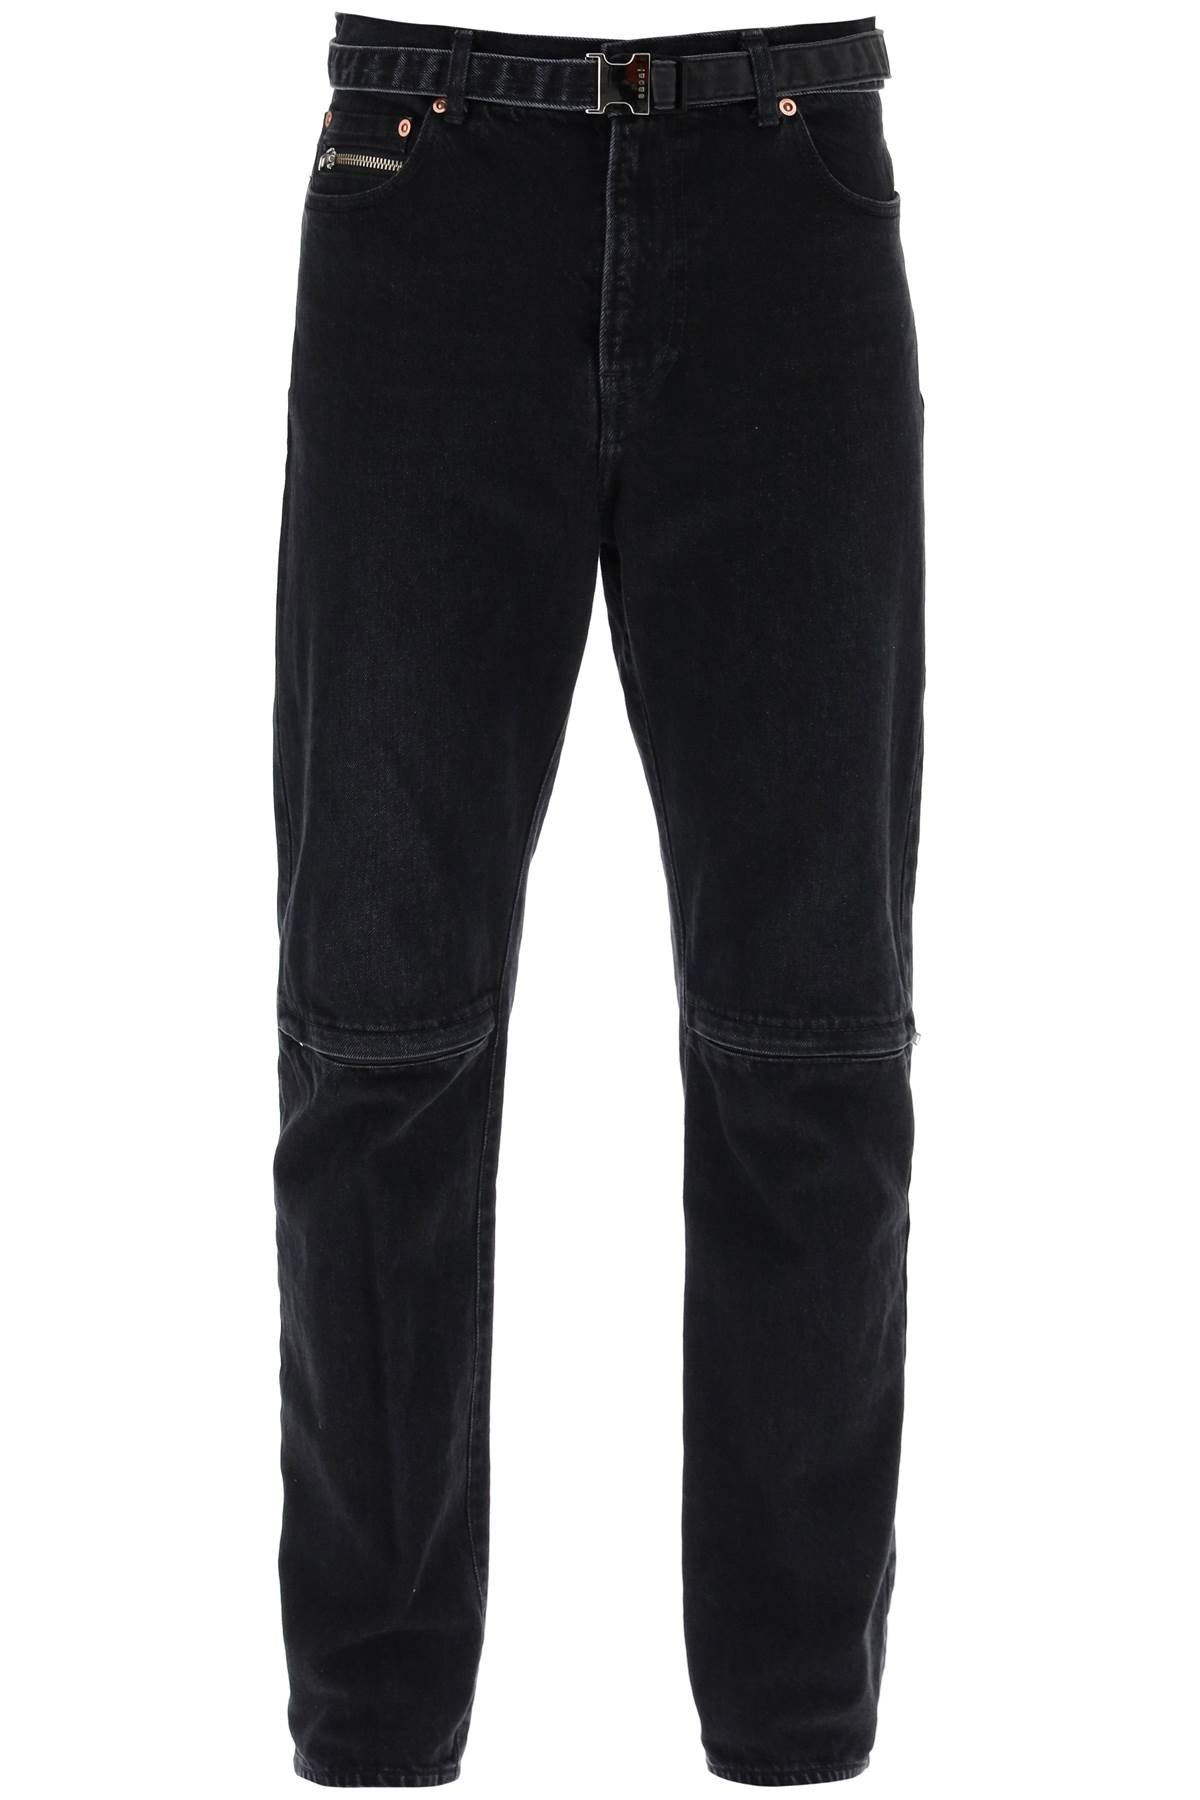 Sacai slim jeans with belt-0